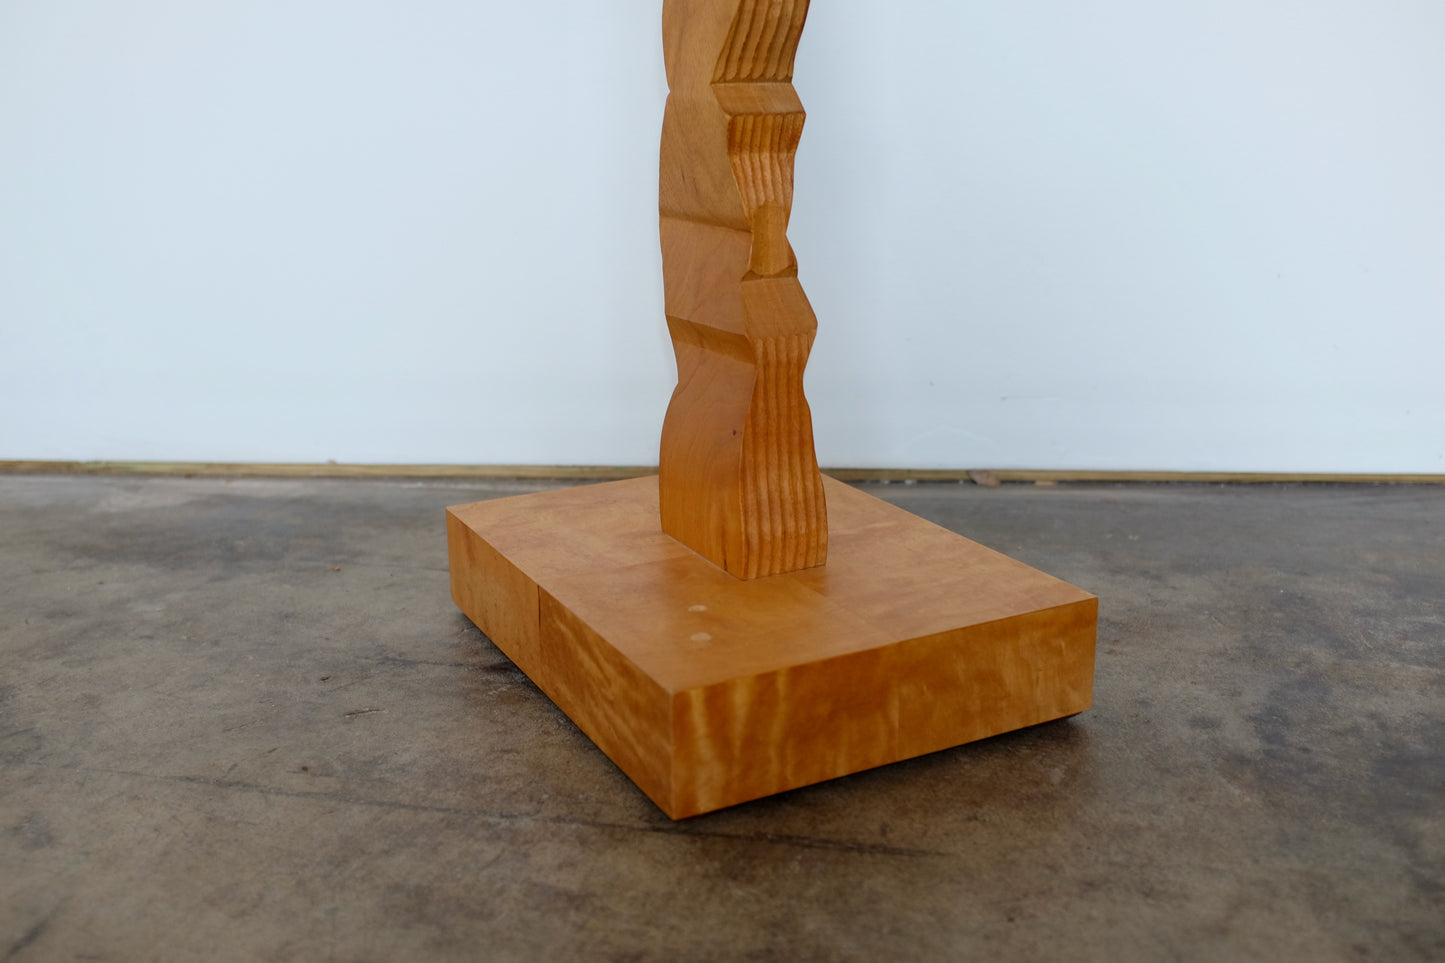 Studio Made Carved Wood Heart Table, Michael Joerling